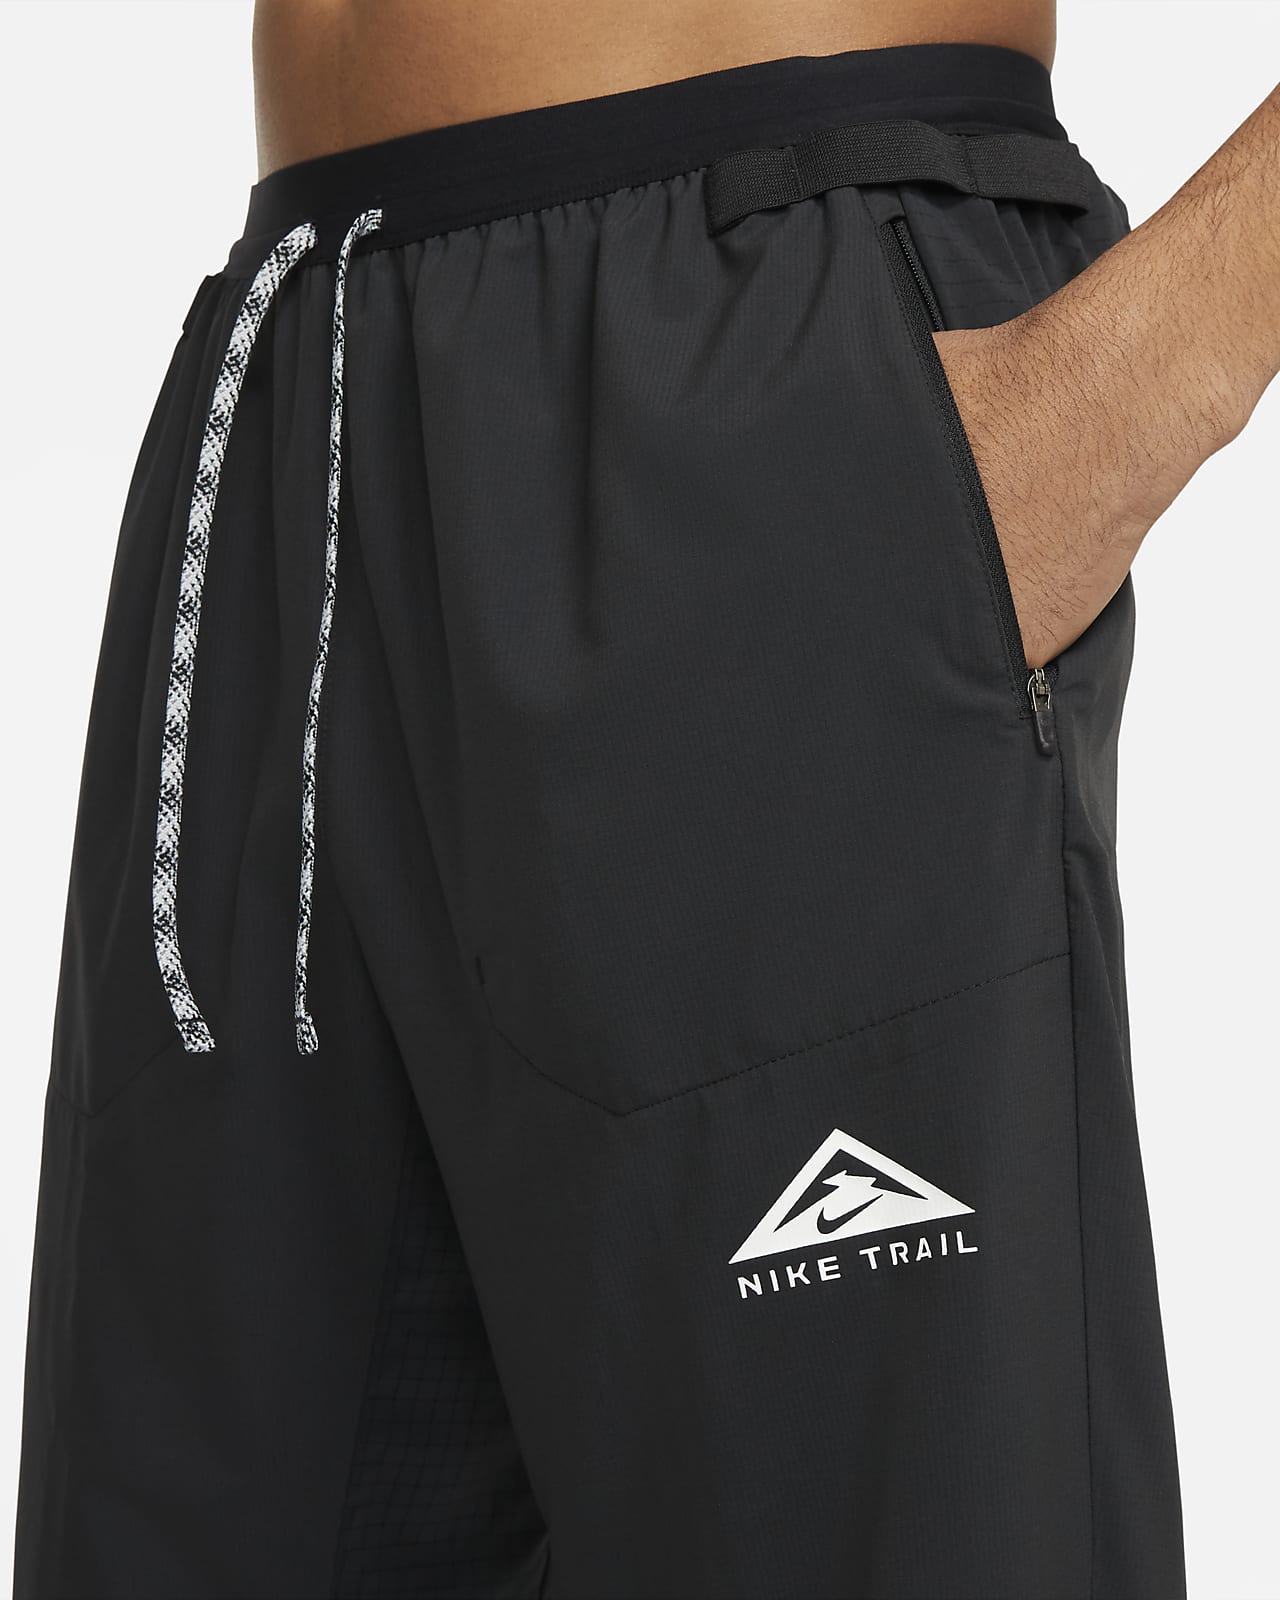 nike trail running pants